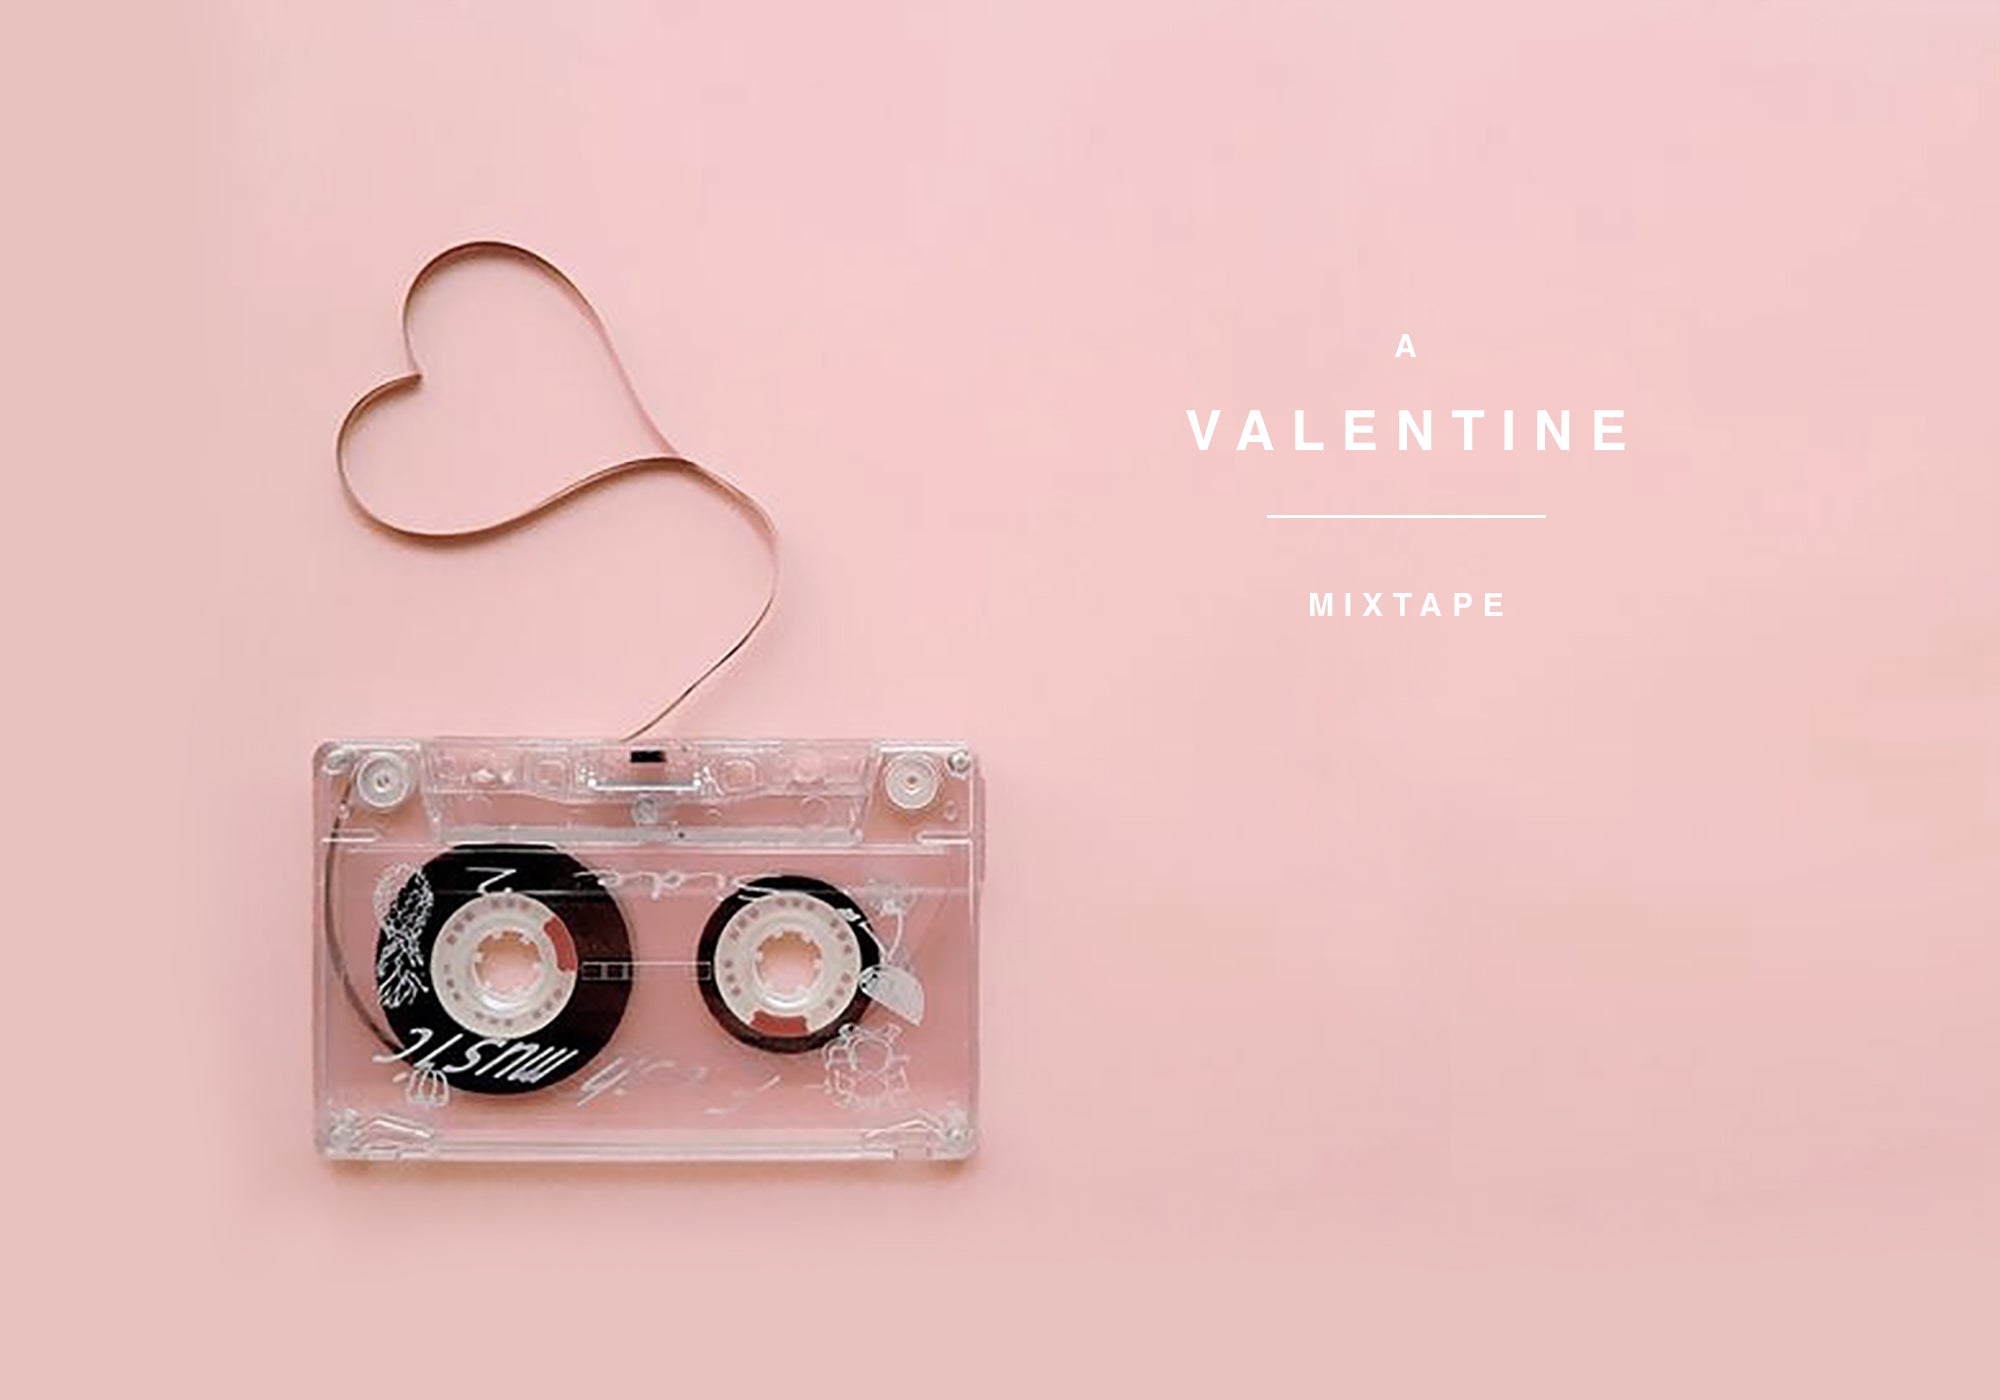 A Valentine Mixtape